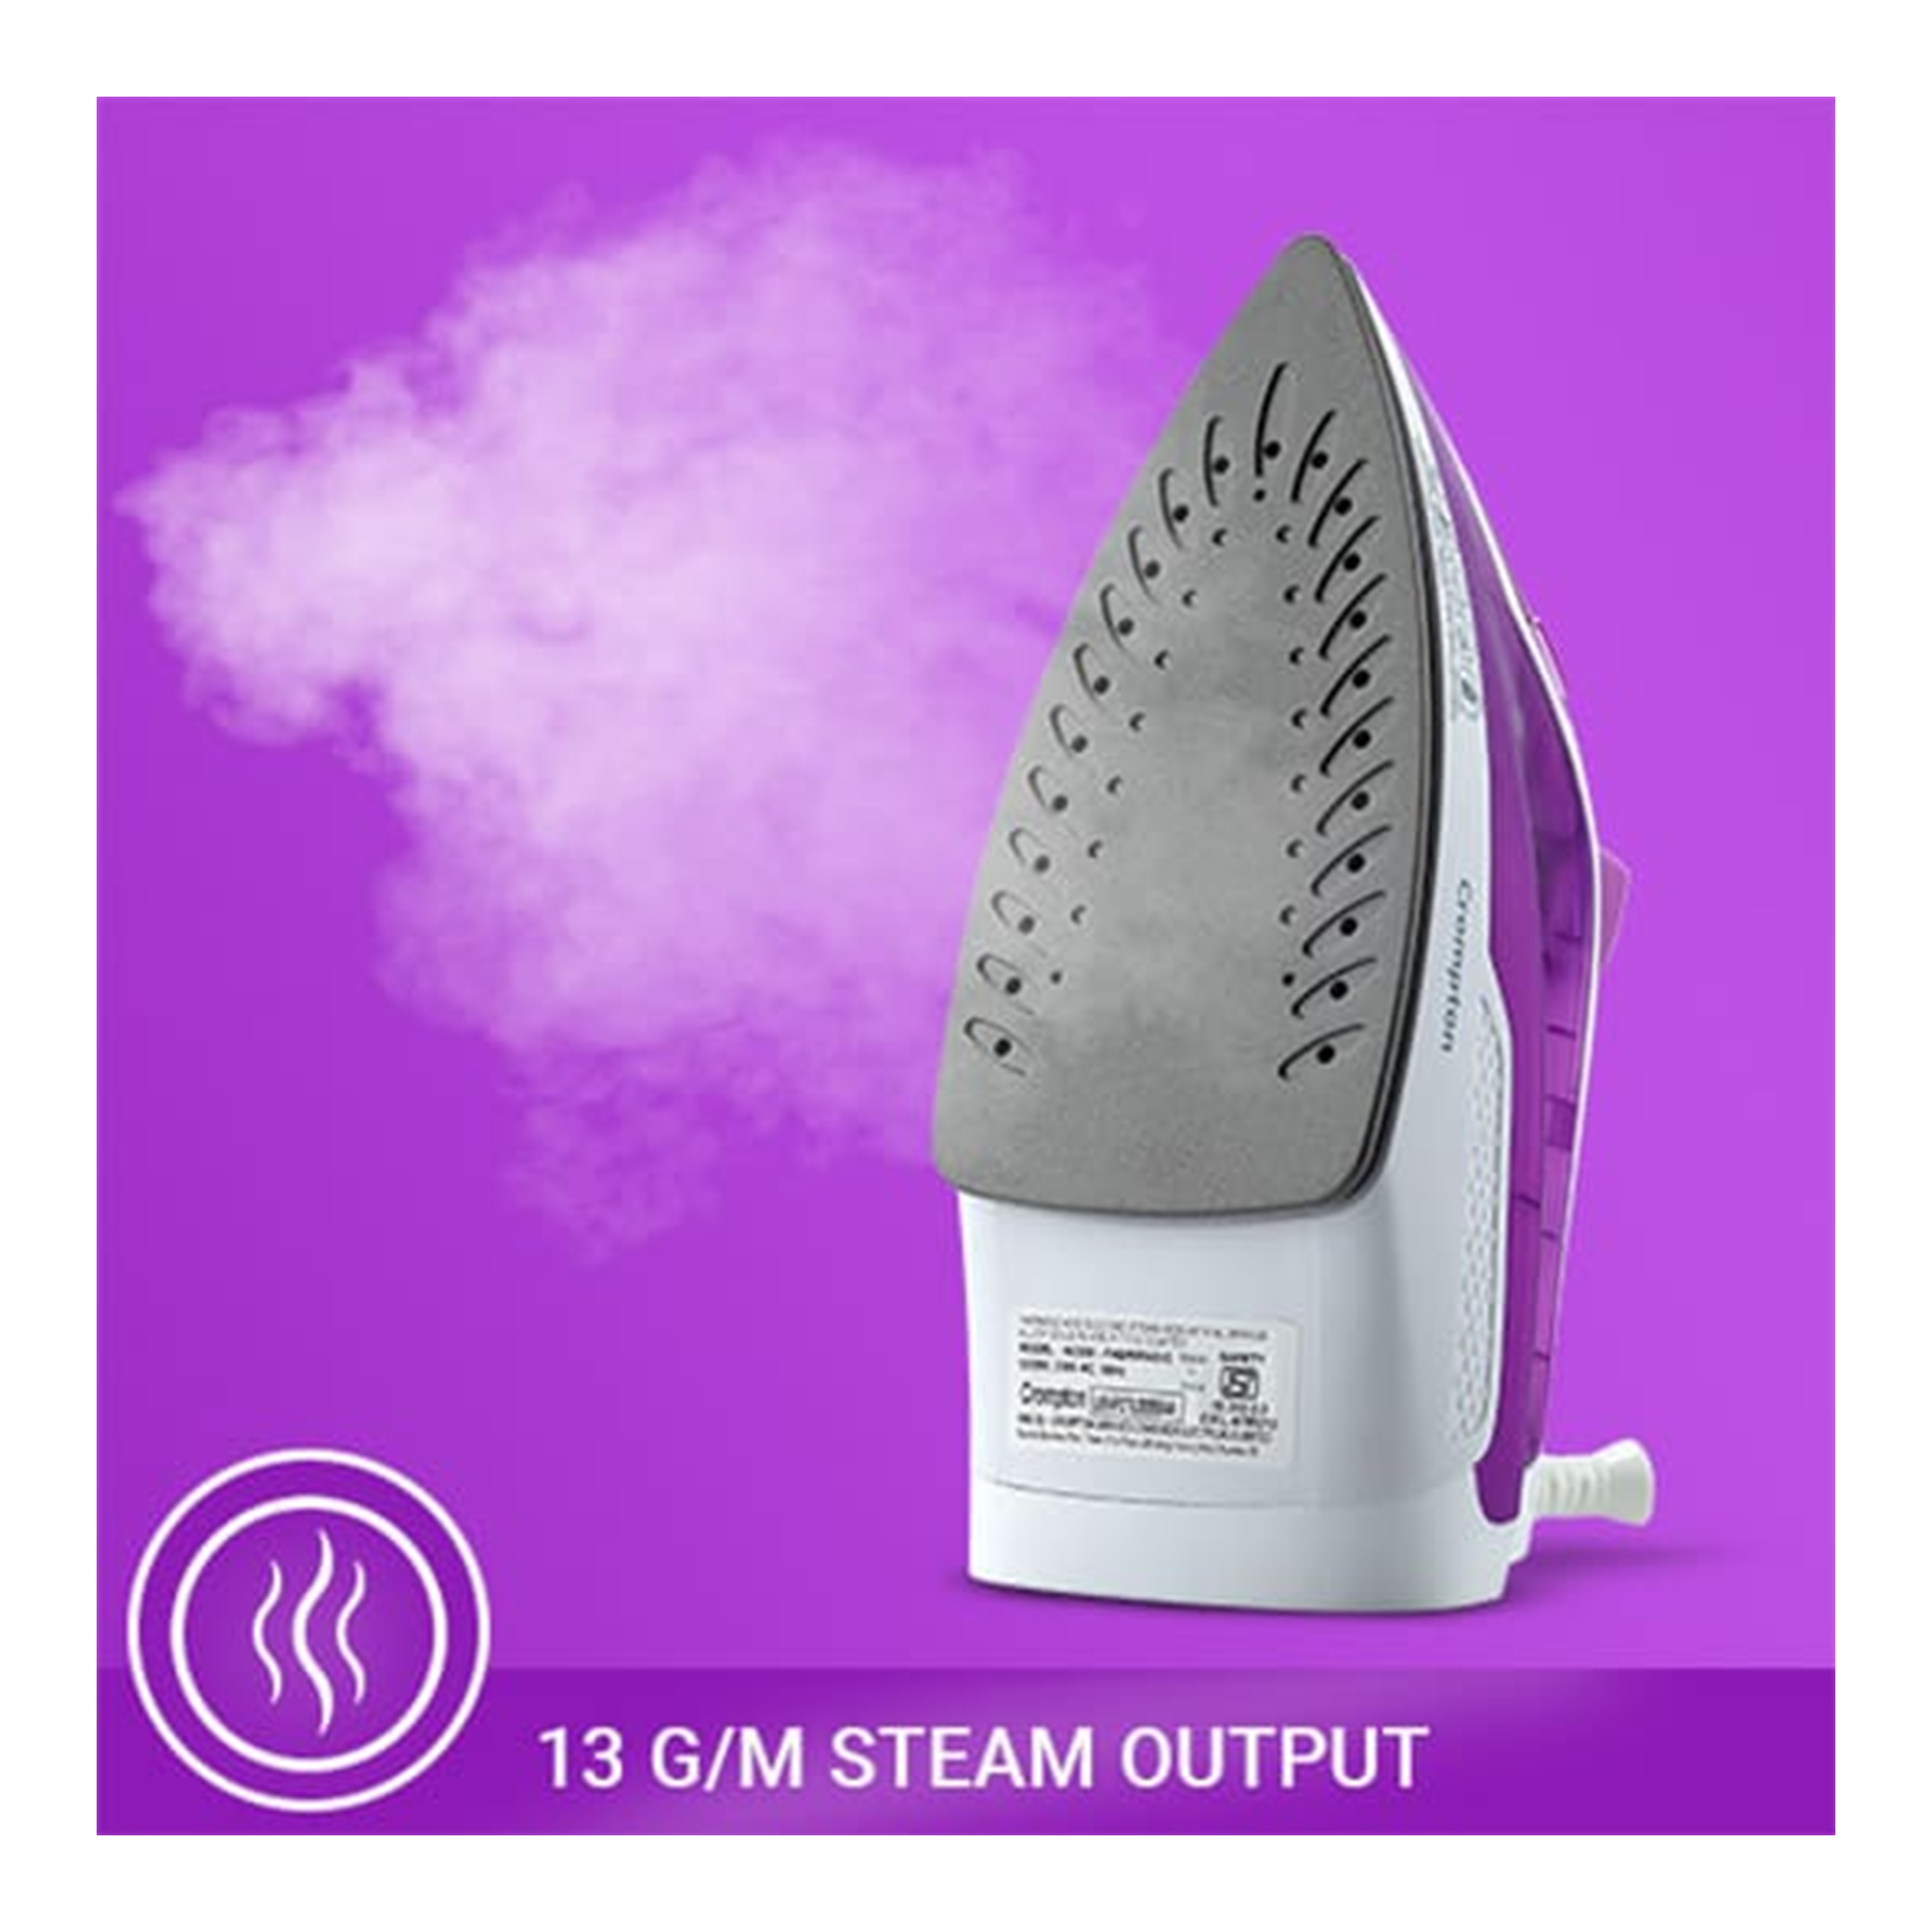 Steam Iron: Buy Best Steamer Online at Best Price in India - Crompton